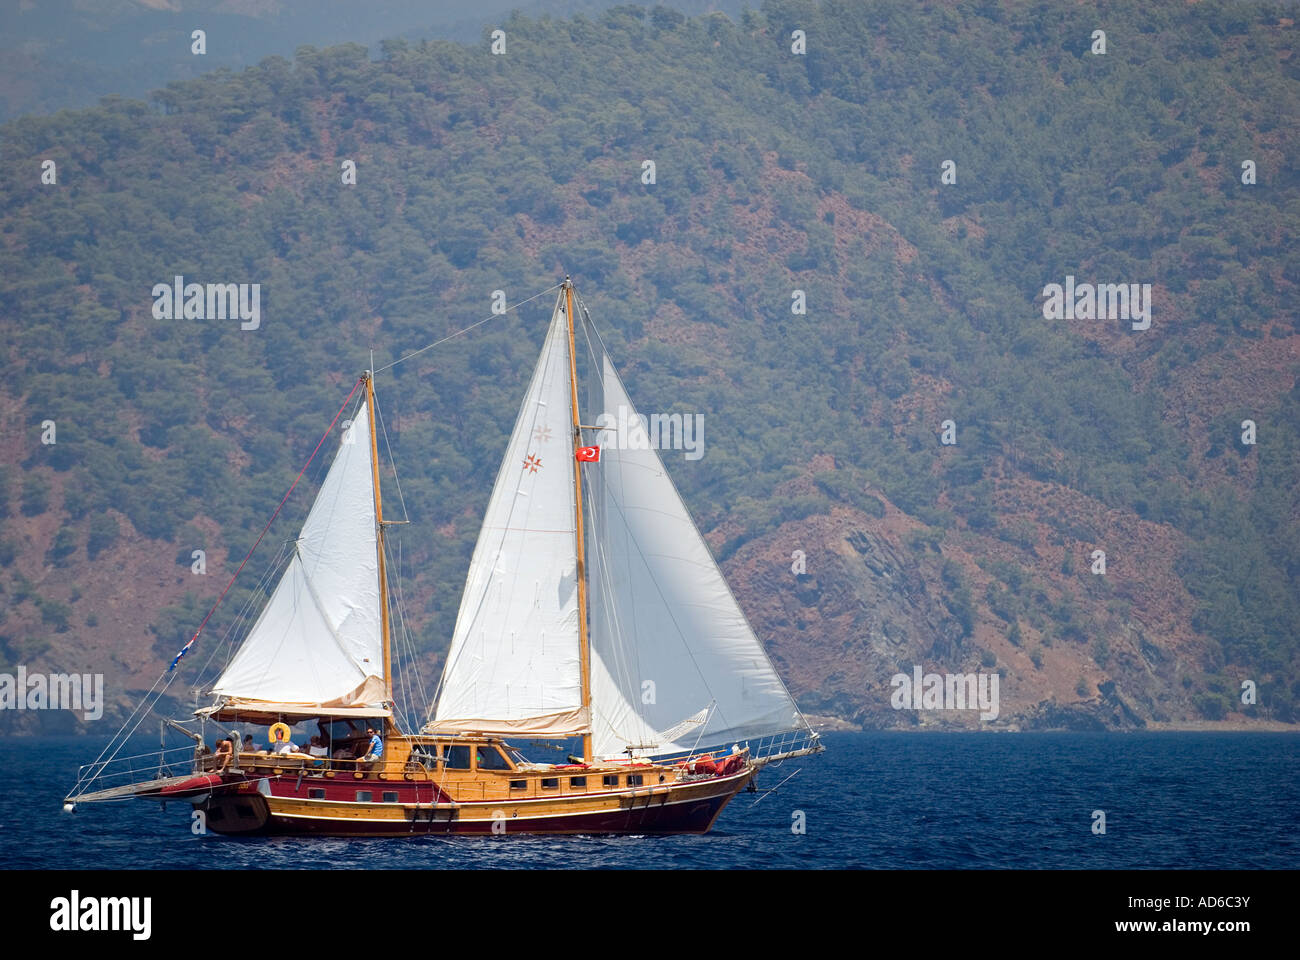 Wooden sailing boat in Gocek, Turkey. Stock Photo